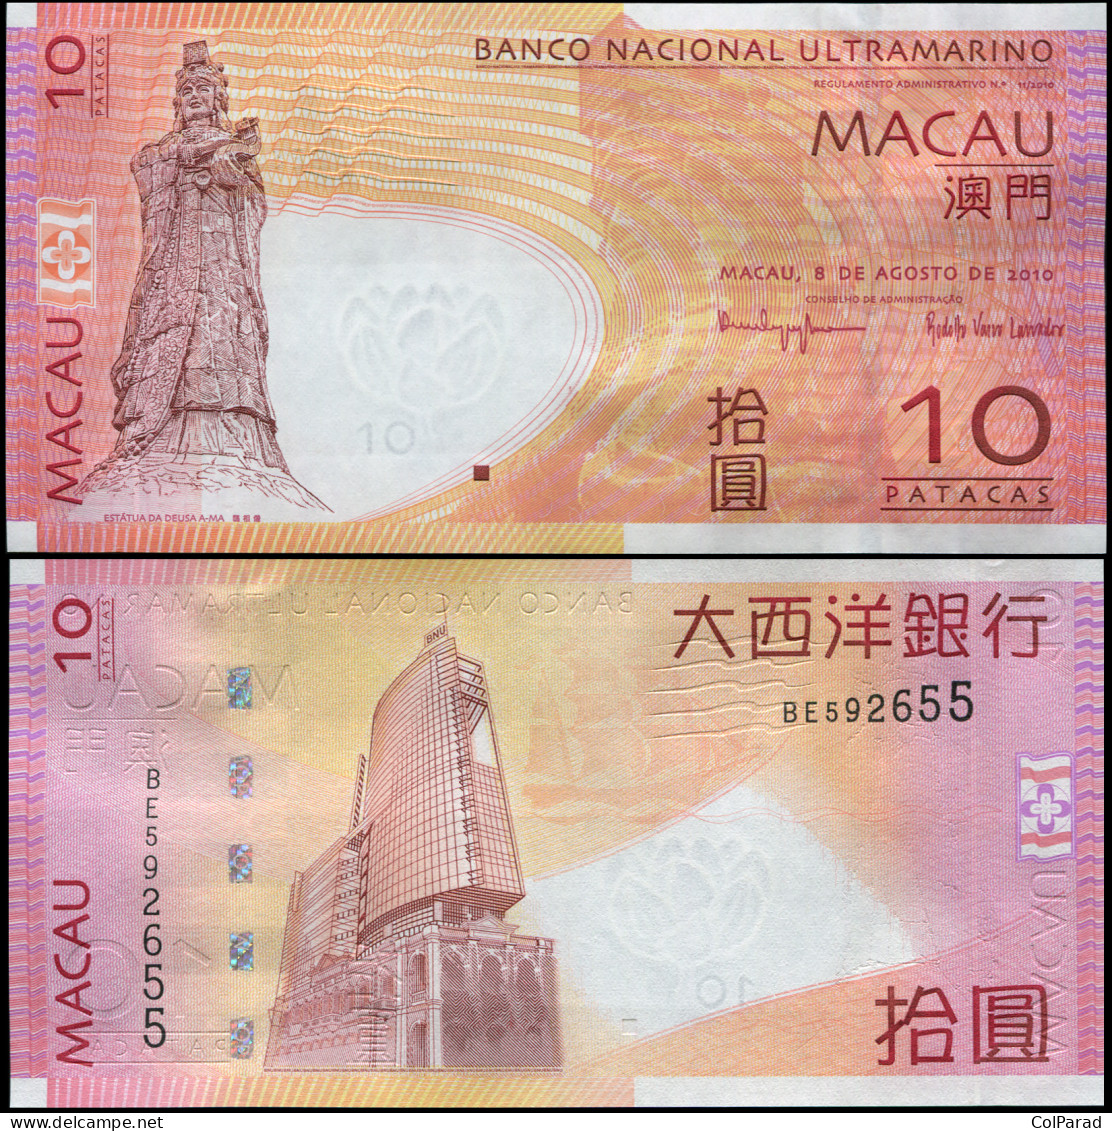 MACAO 10 PATACAS - 08.08.2010 - Paper Unc - P.80b Banknote - Macau